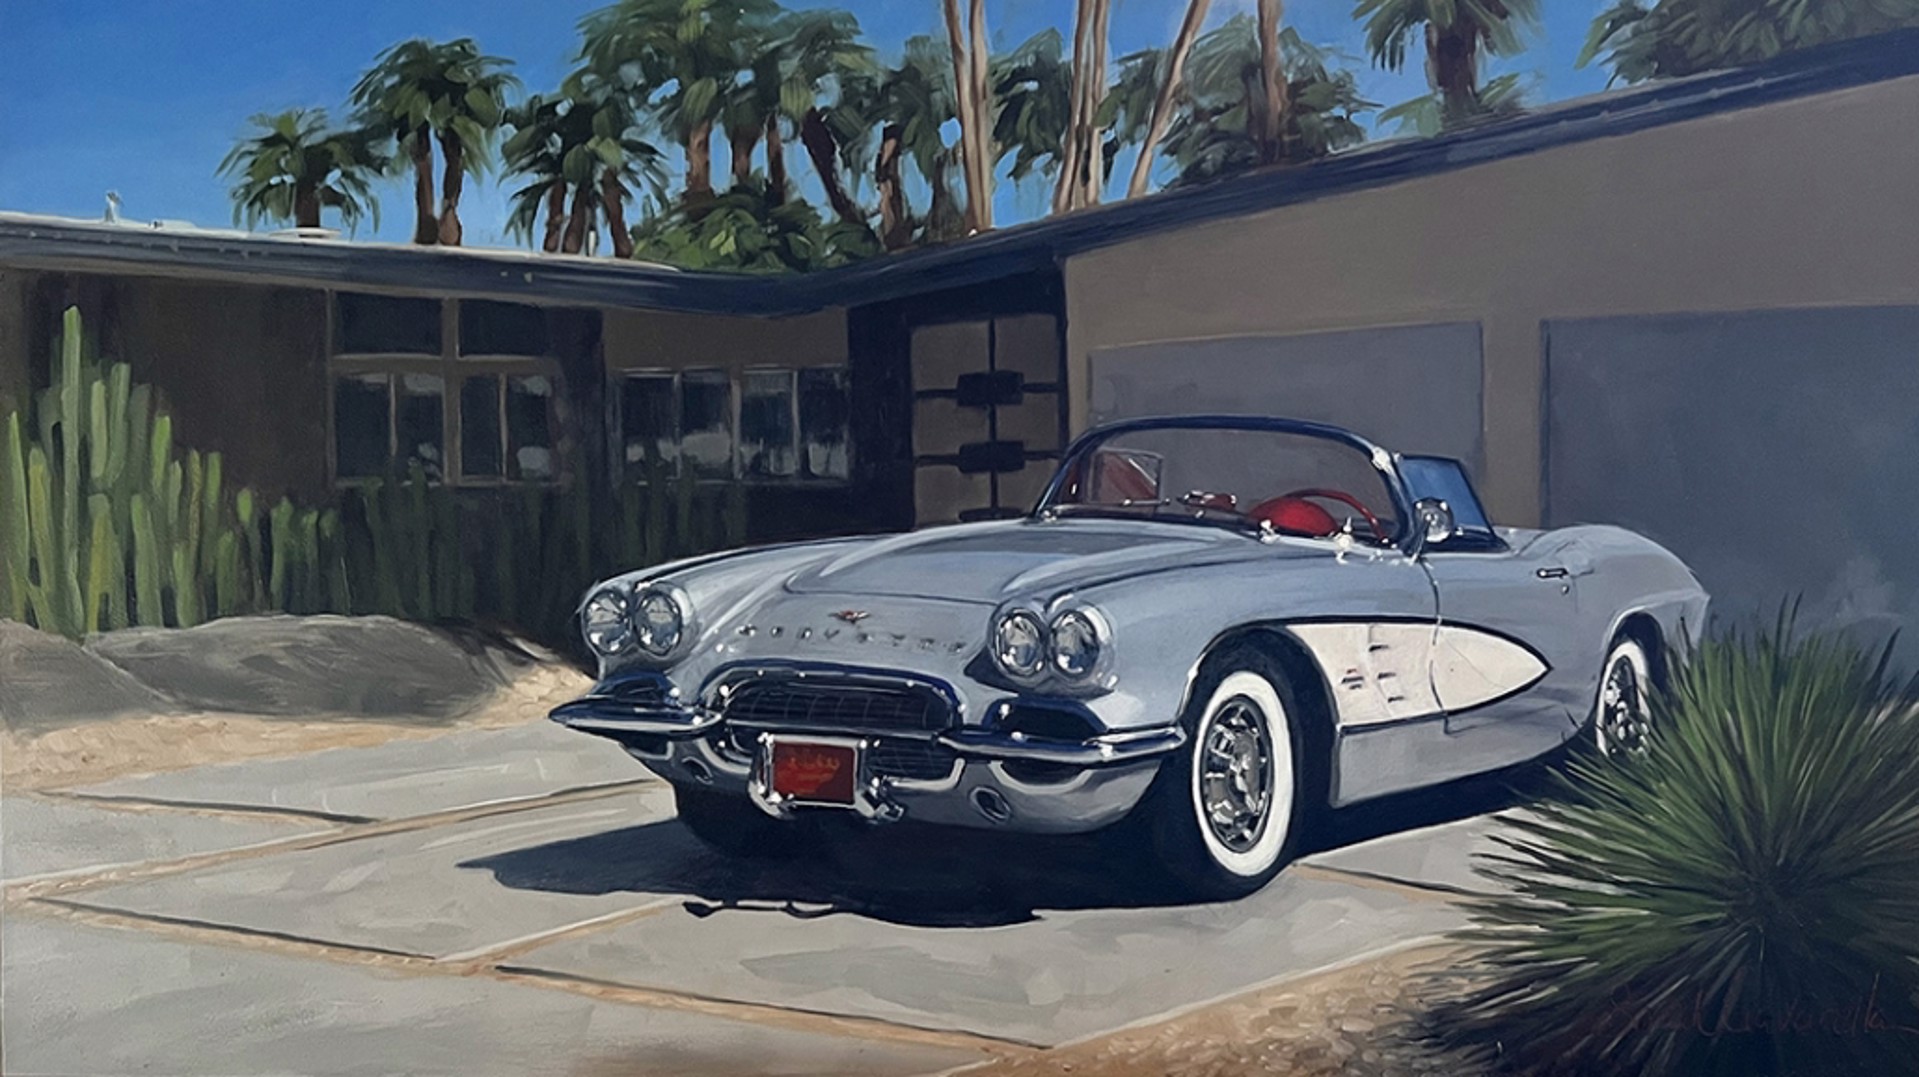 Palm Springs Corvette by Sarah Ciavarella